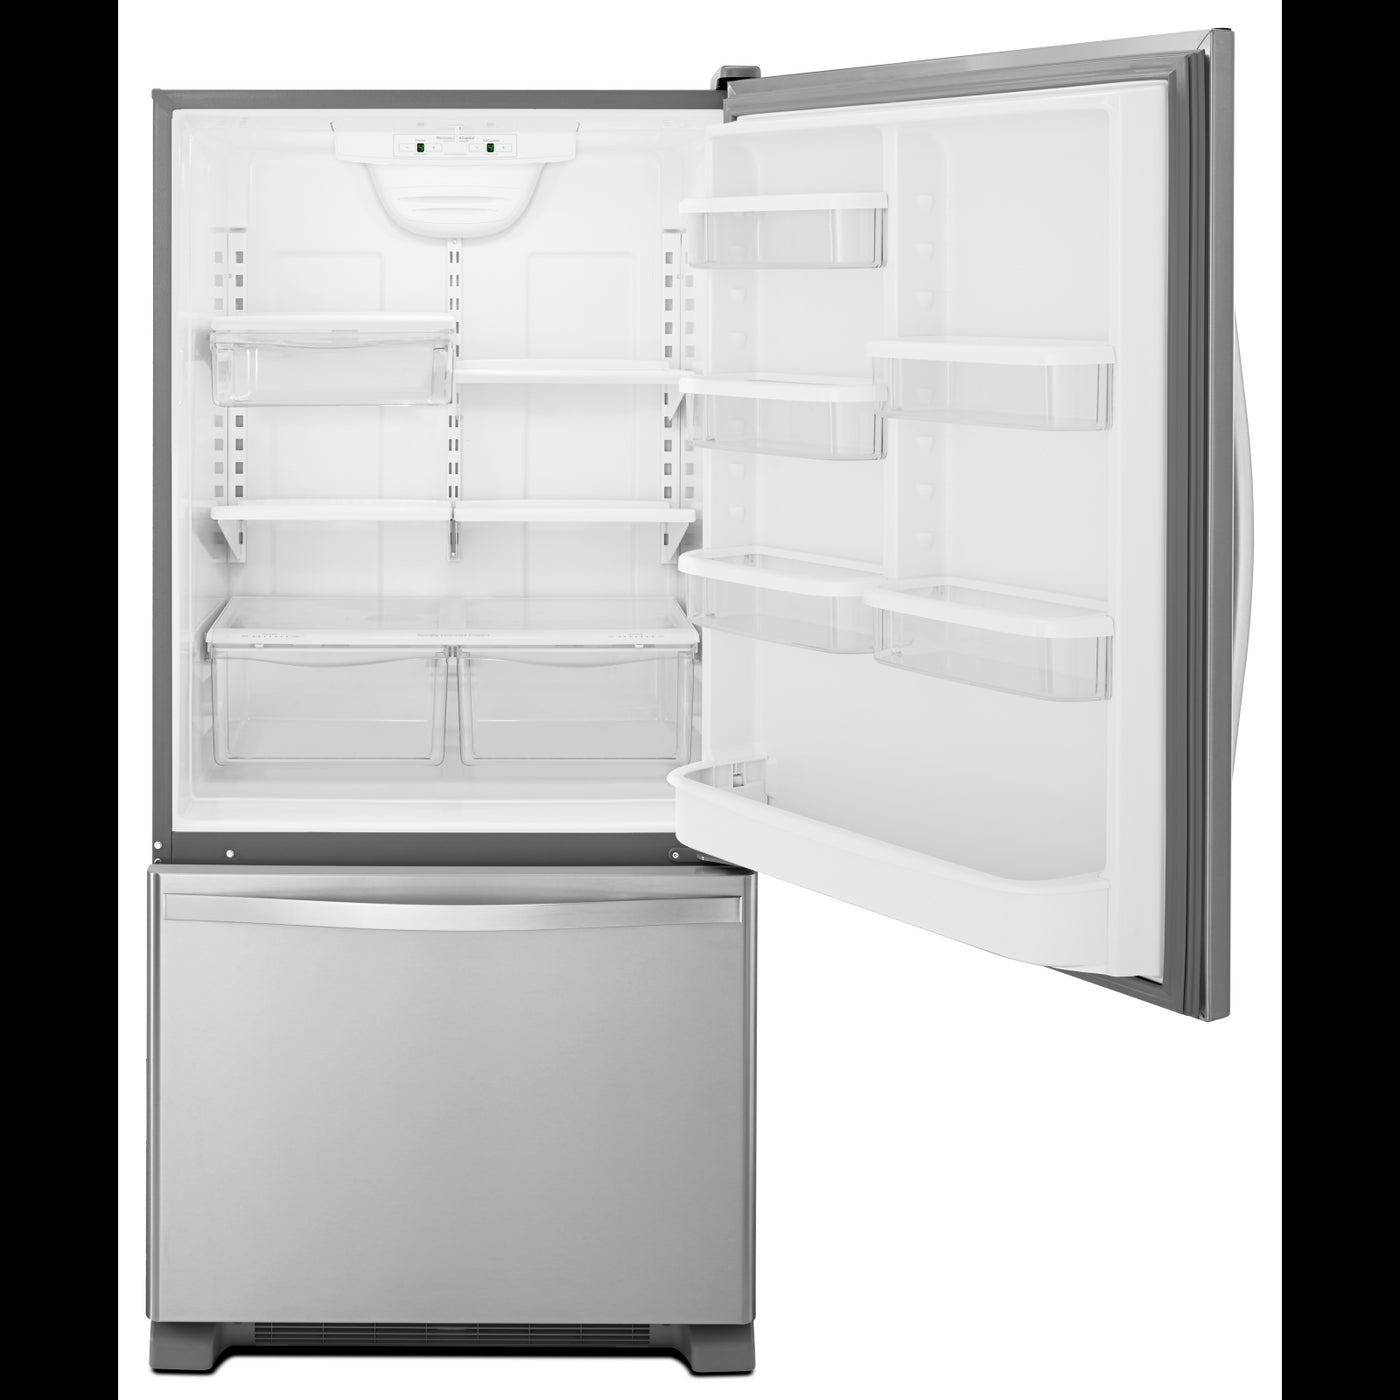 Whirlpool Stainless Steel Bottom-Freezer Refrigerator (19 Cu. Ft.) - WRB329RFBM